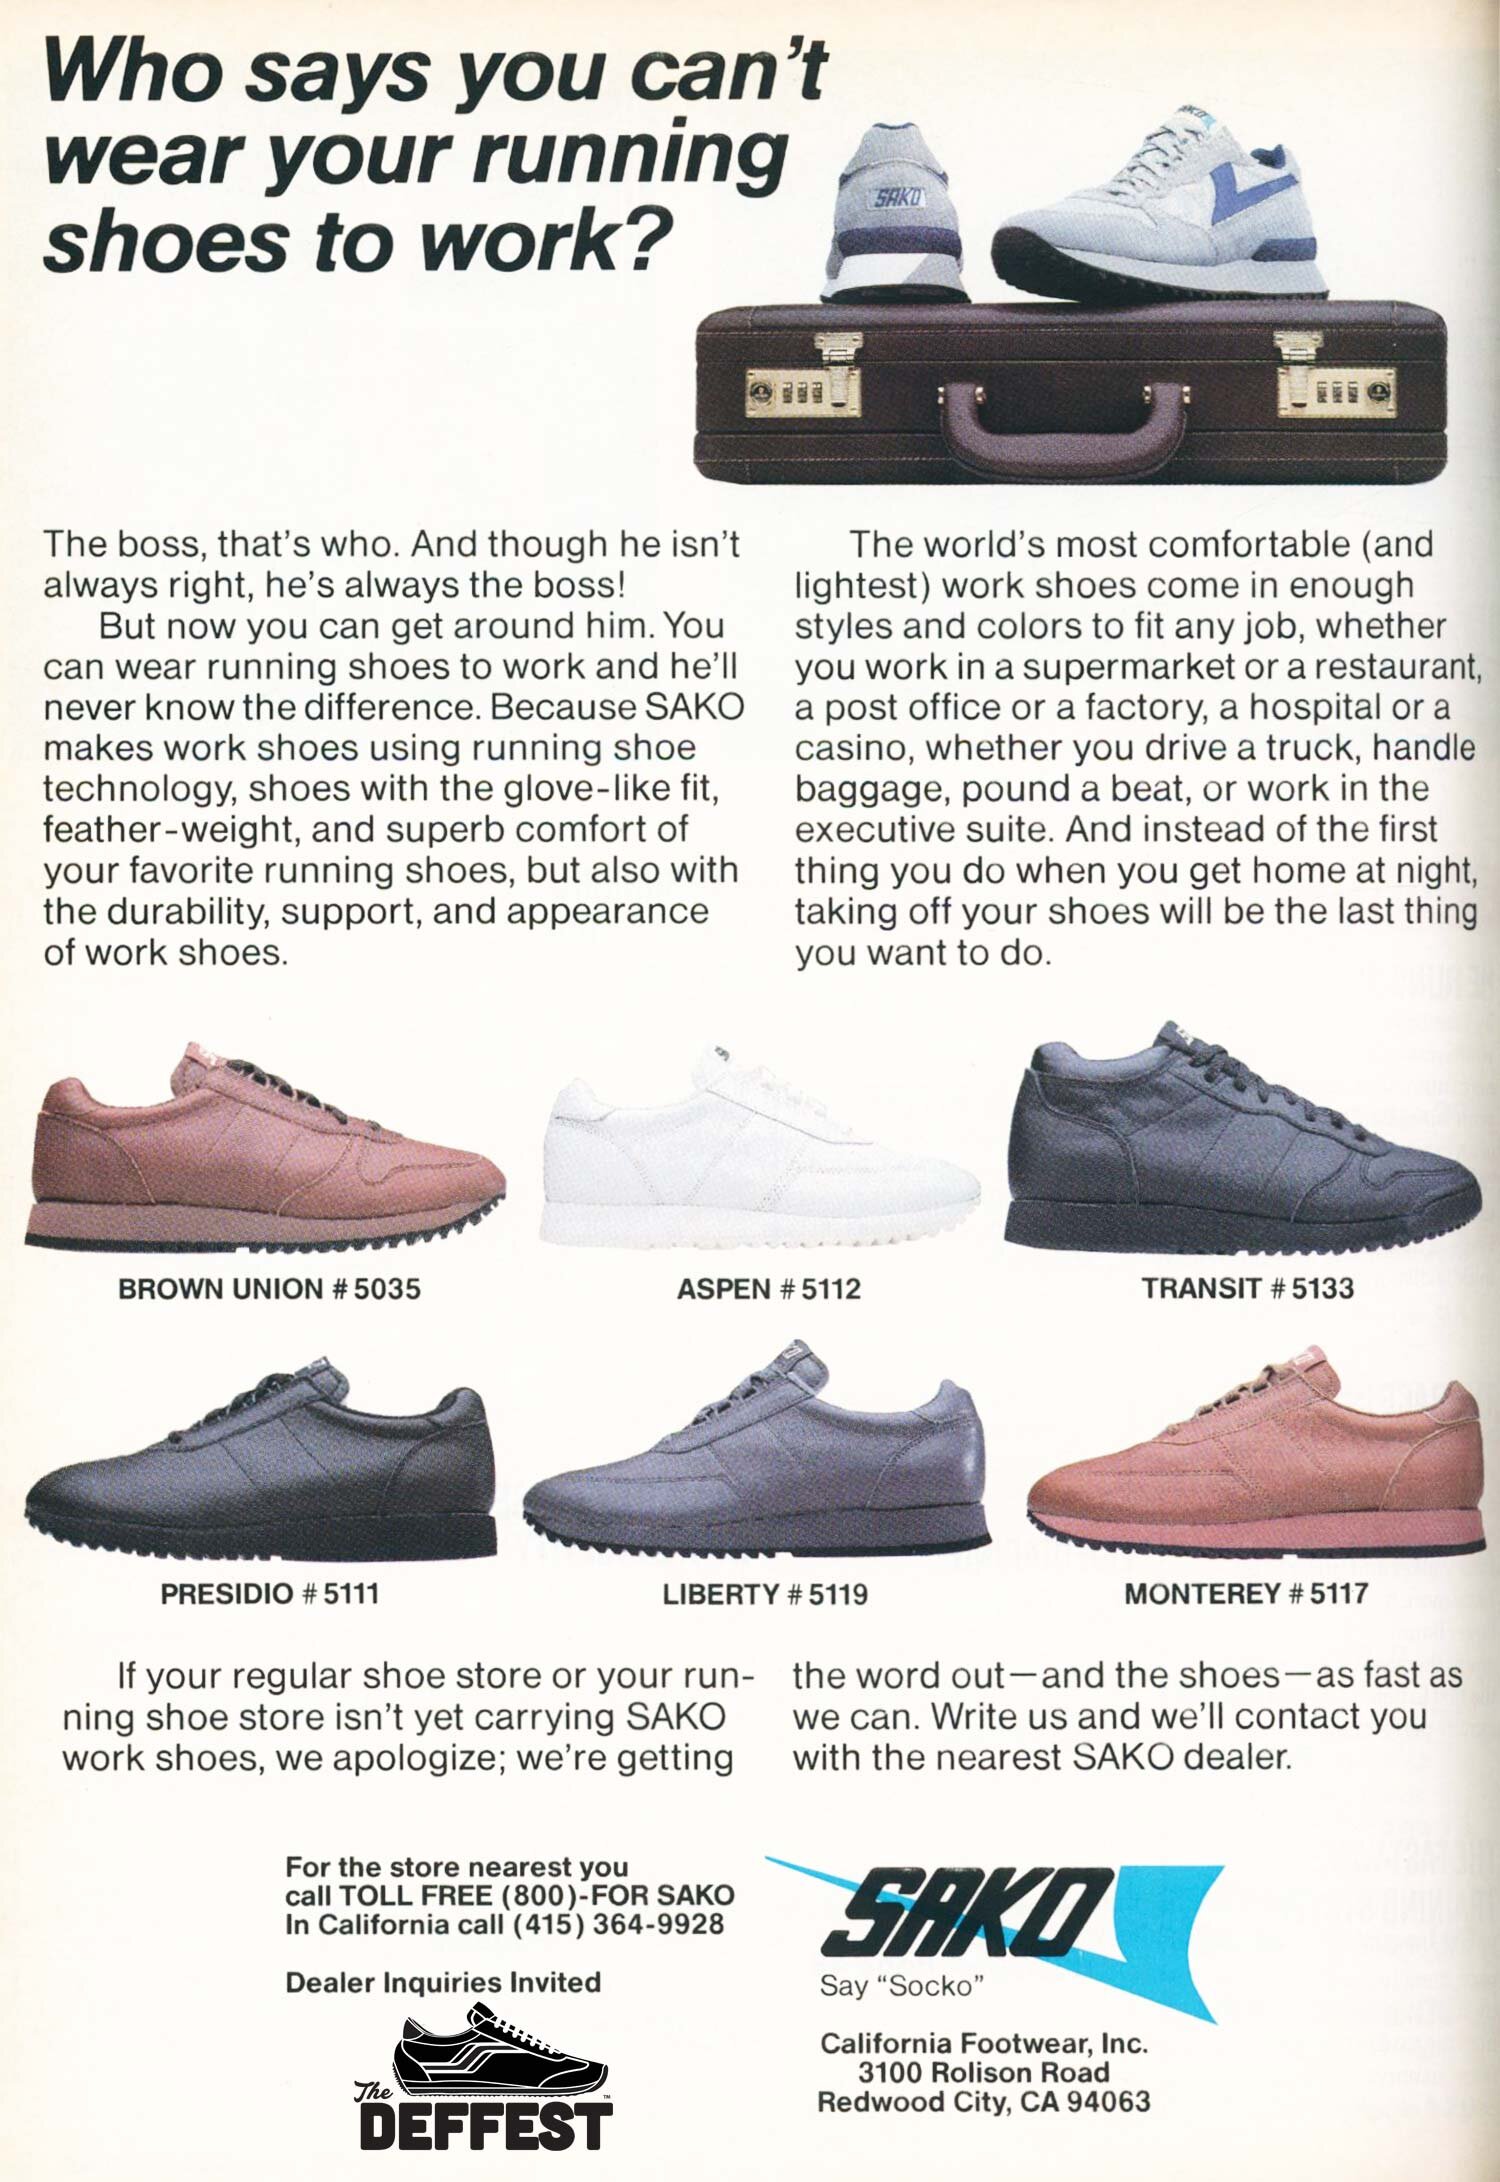 1985s vintage sneaker ad by Sako @ The Deffest